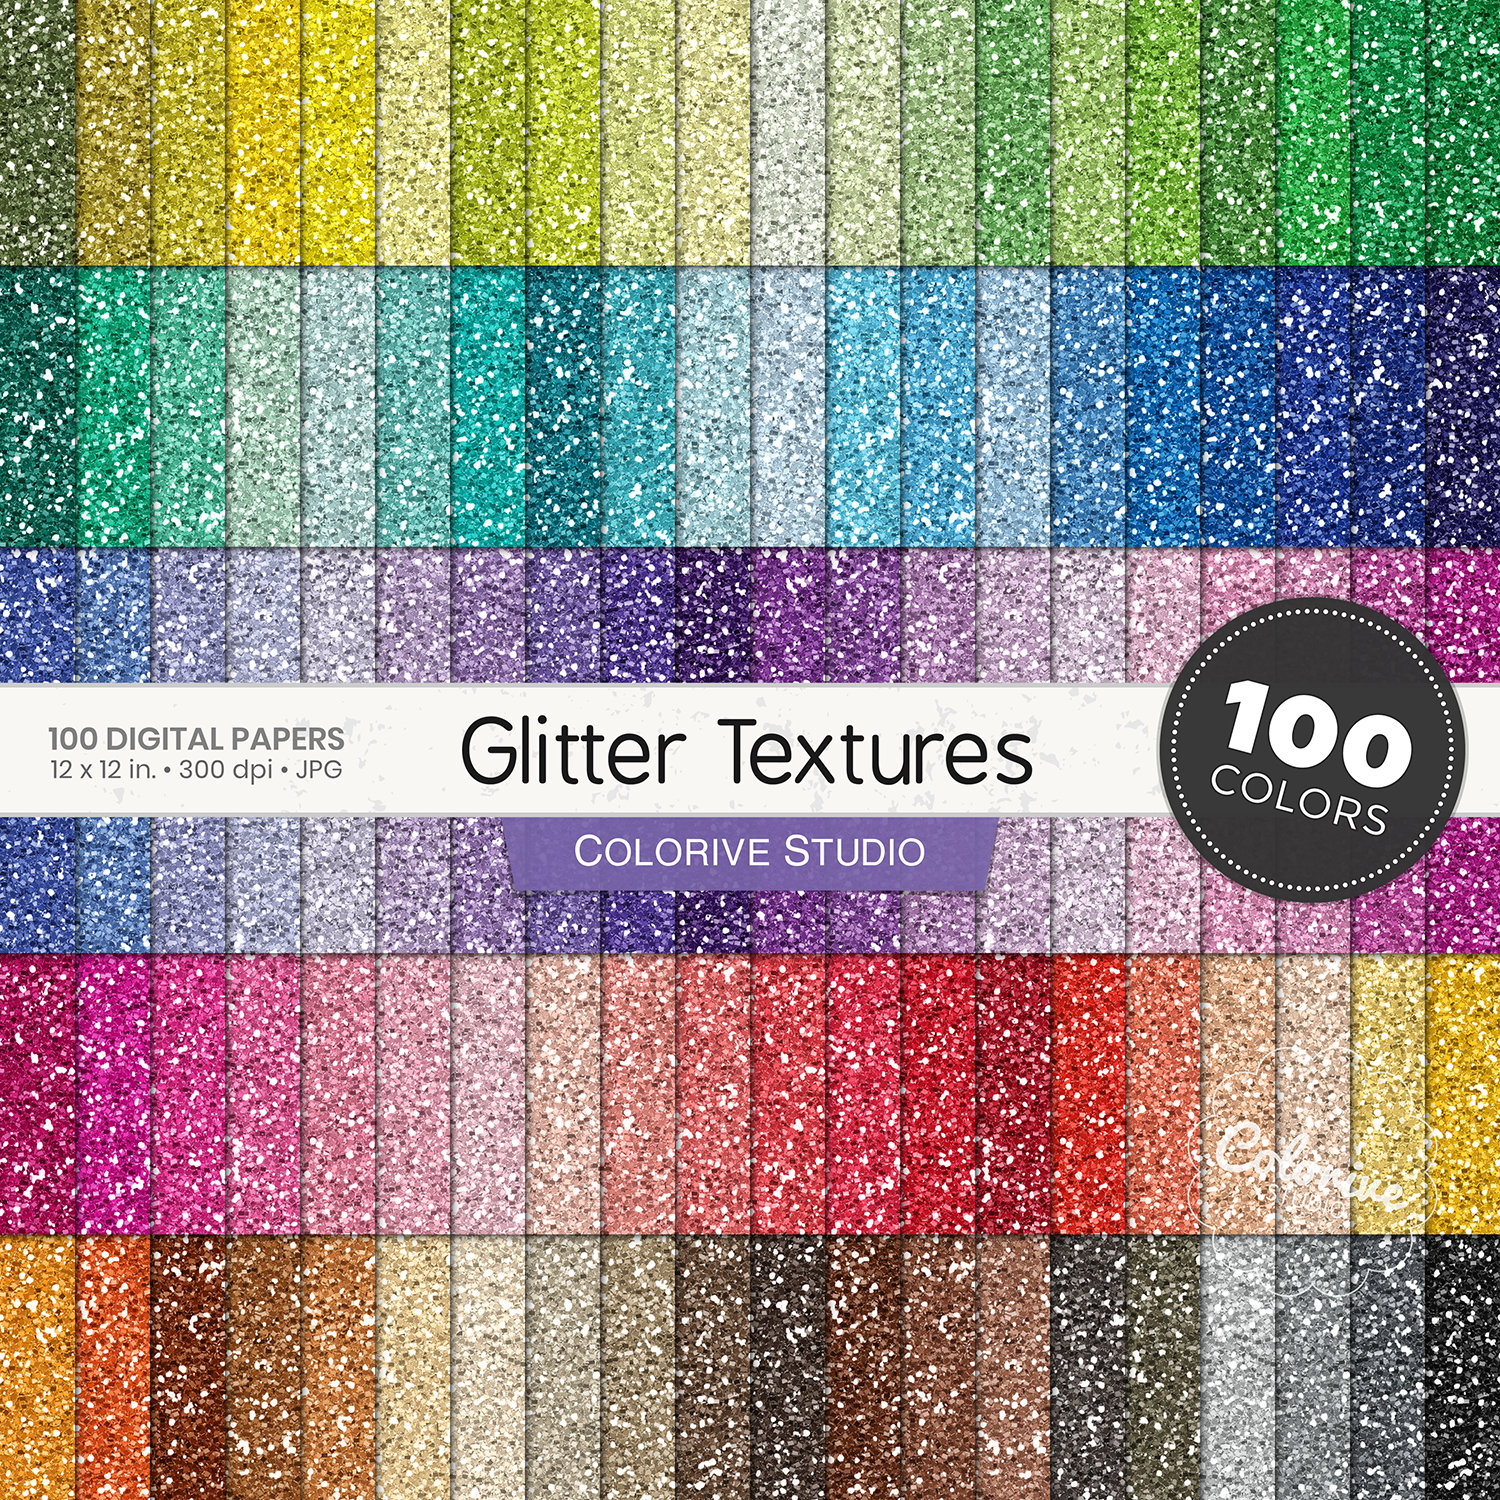 Rainbow Glitter Foam Stickers (Pack of 100) Craft Embellishments